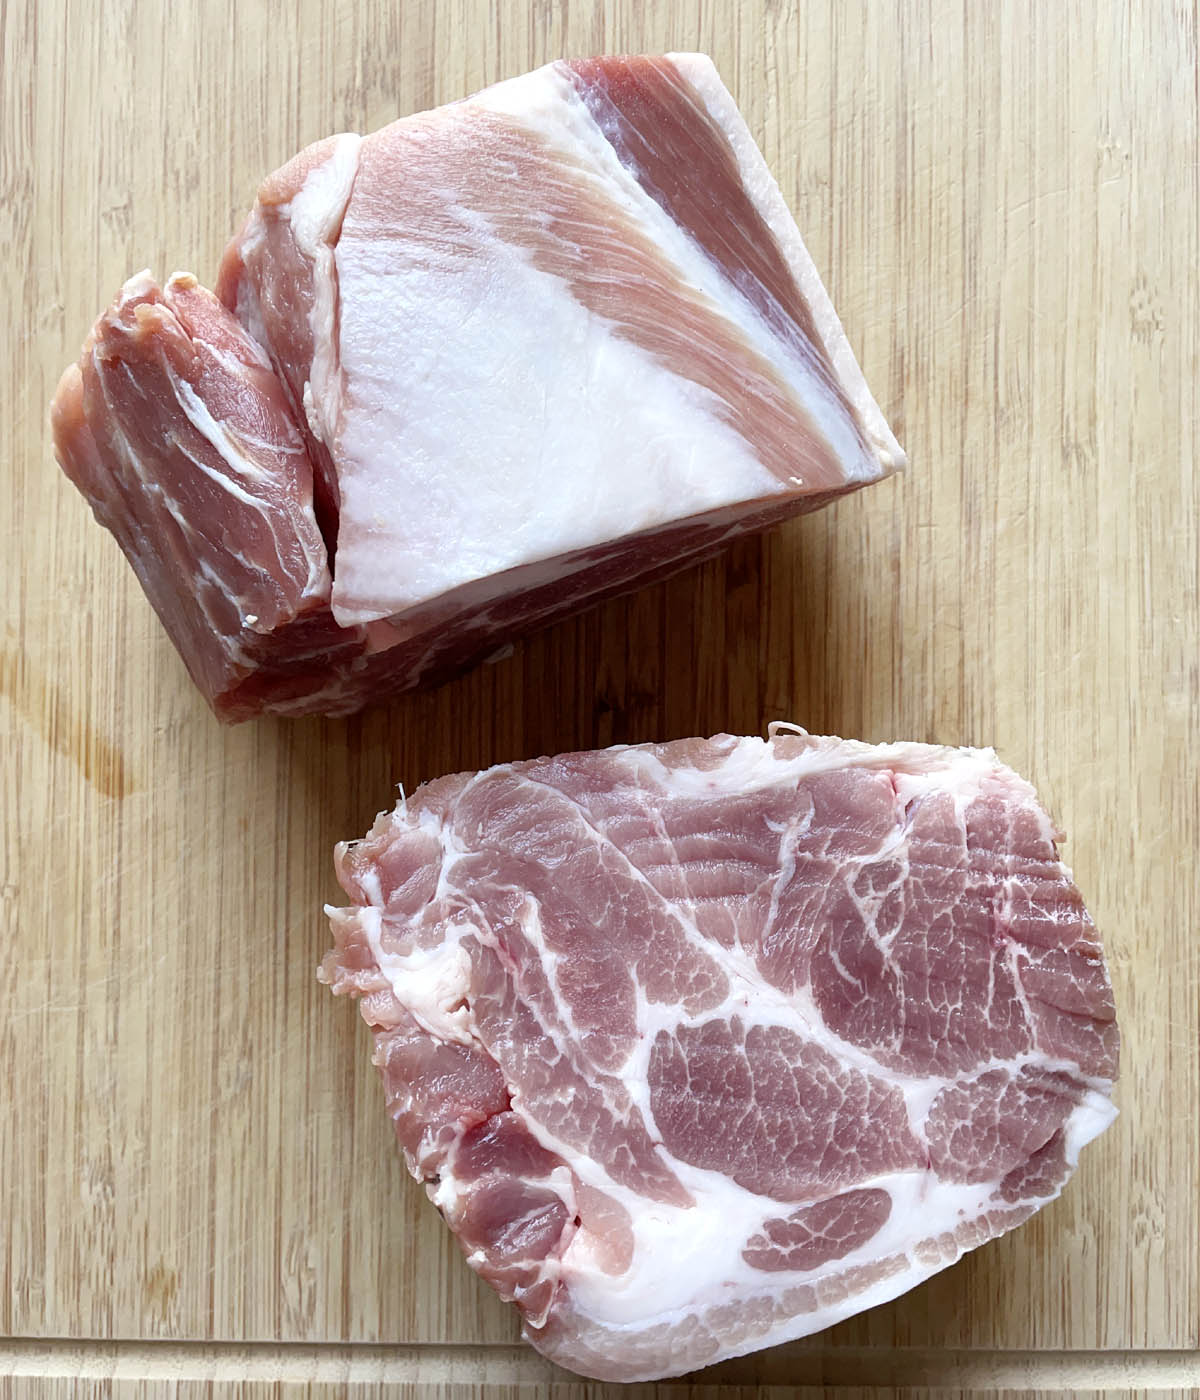 A raw chunk of pork roast, cut into two chunks on a wooden cutting board.